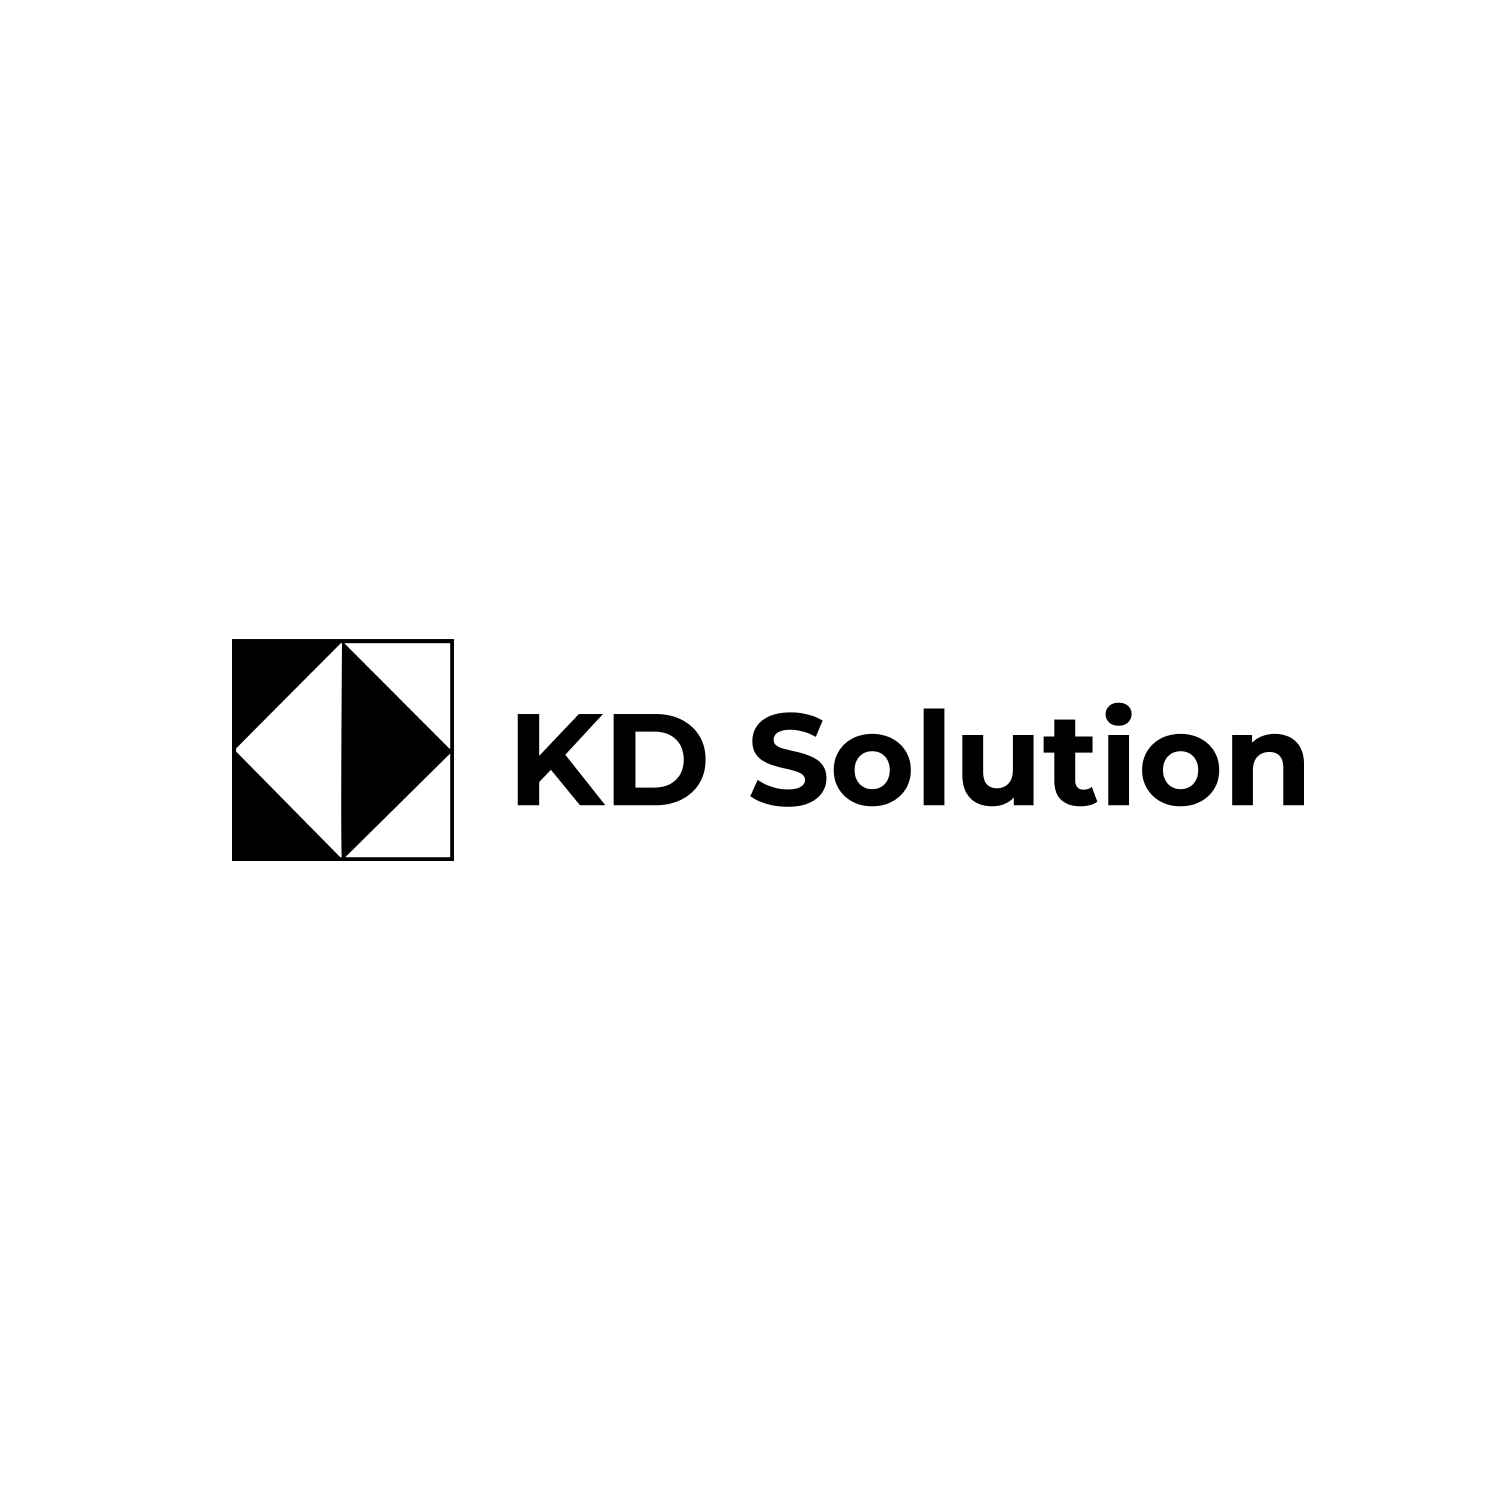 KD-solution Branding Start up - Logo Vanhuffel